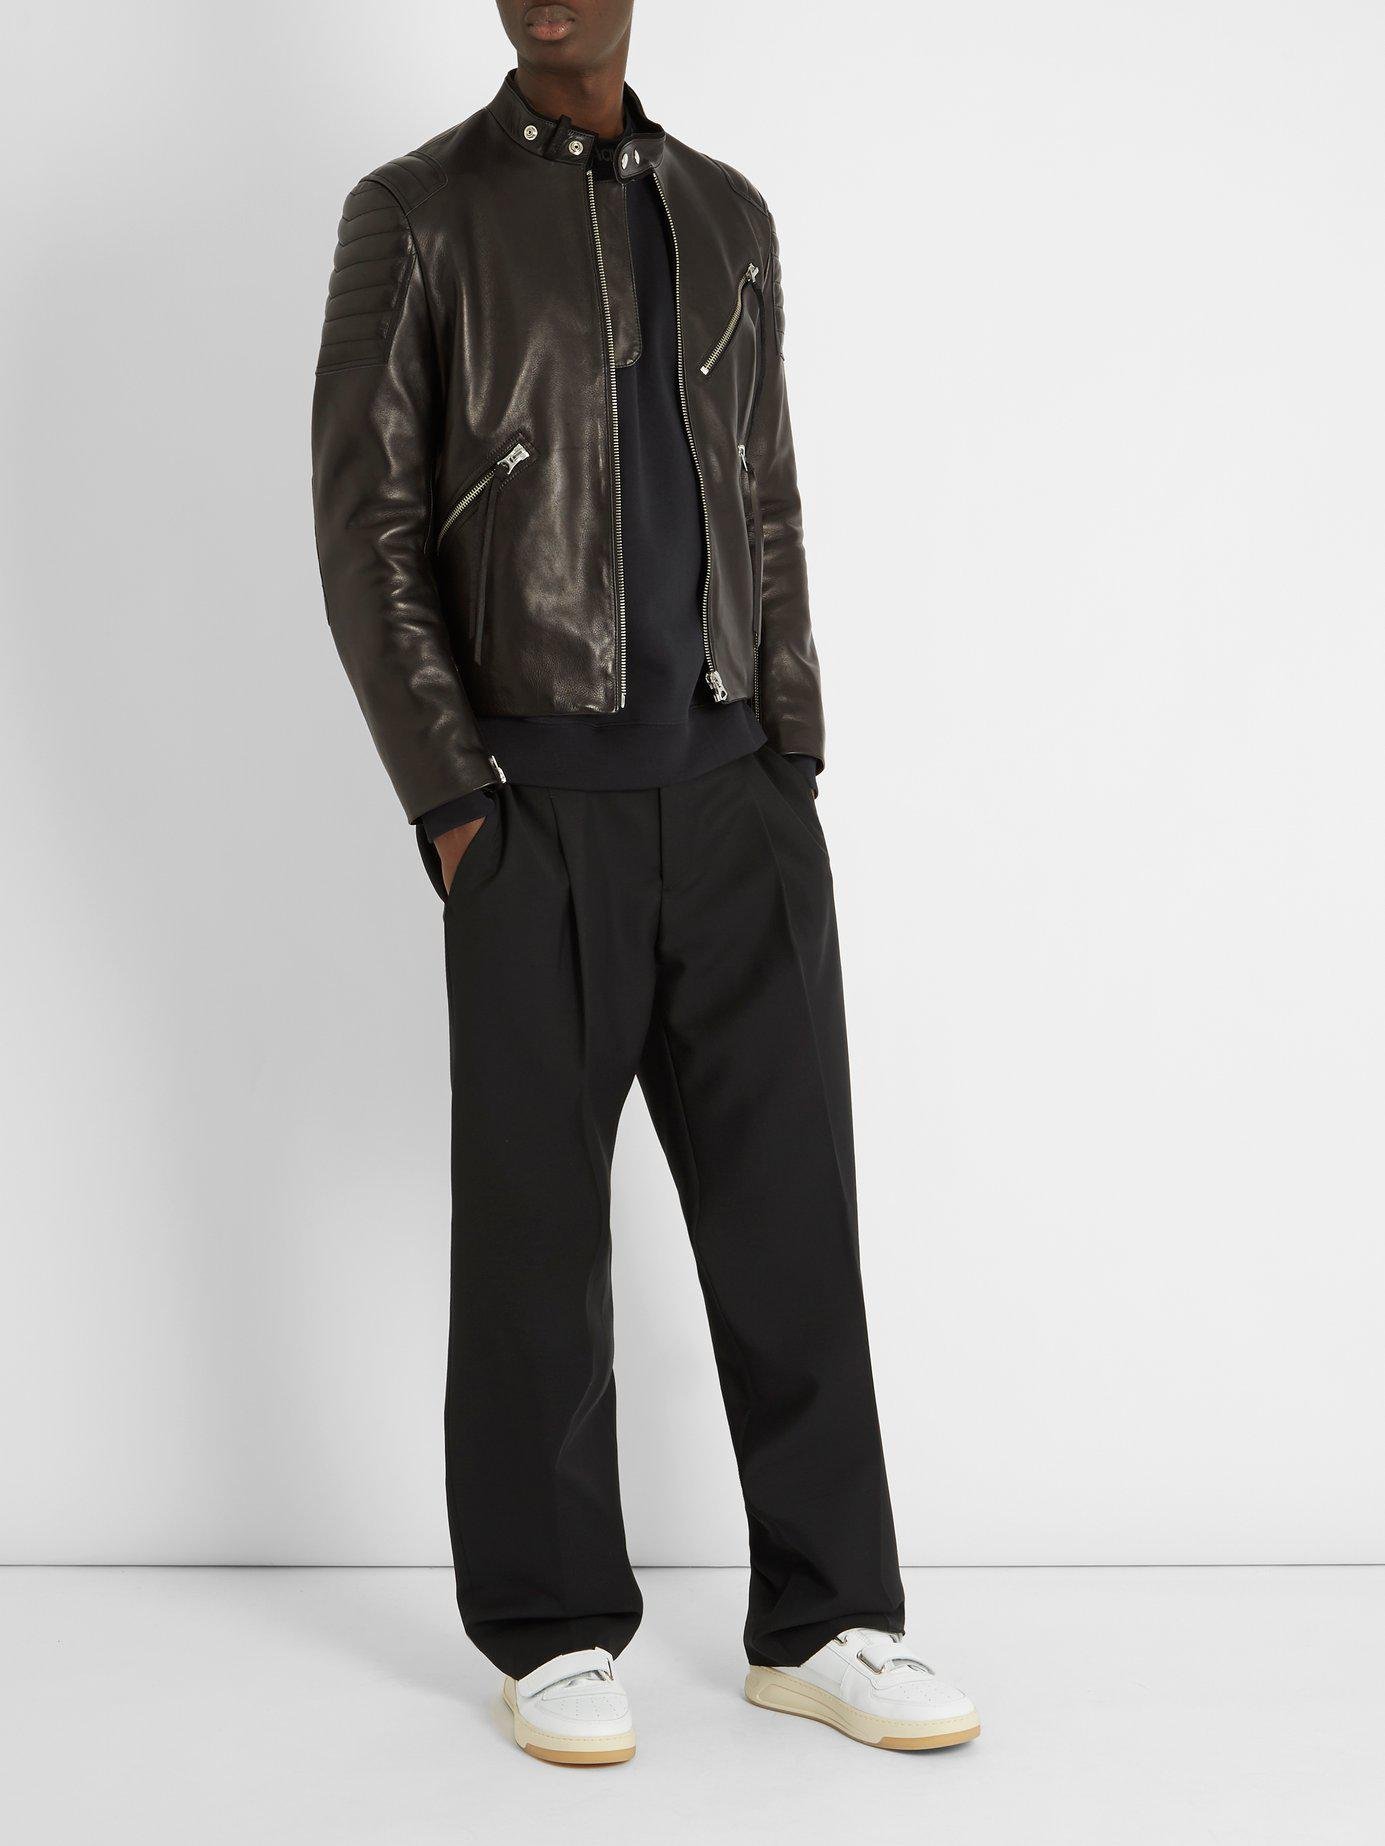 Acne Studios Oliver Chevron Leather Jacket in Black for Men - Lyst